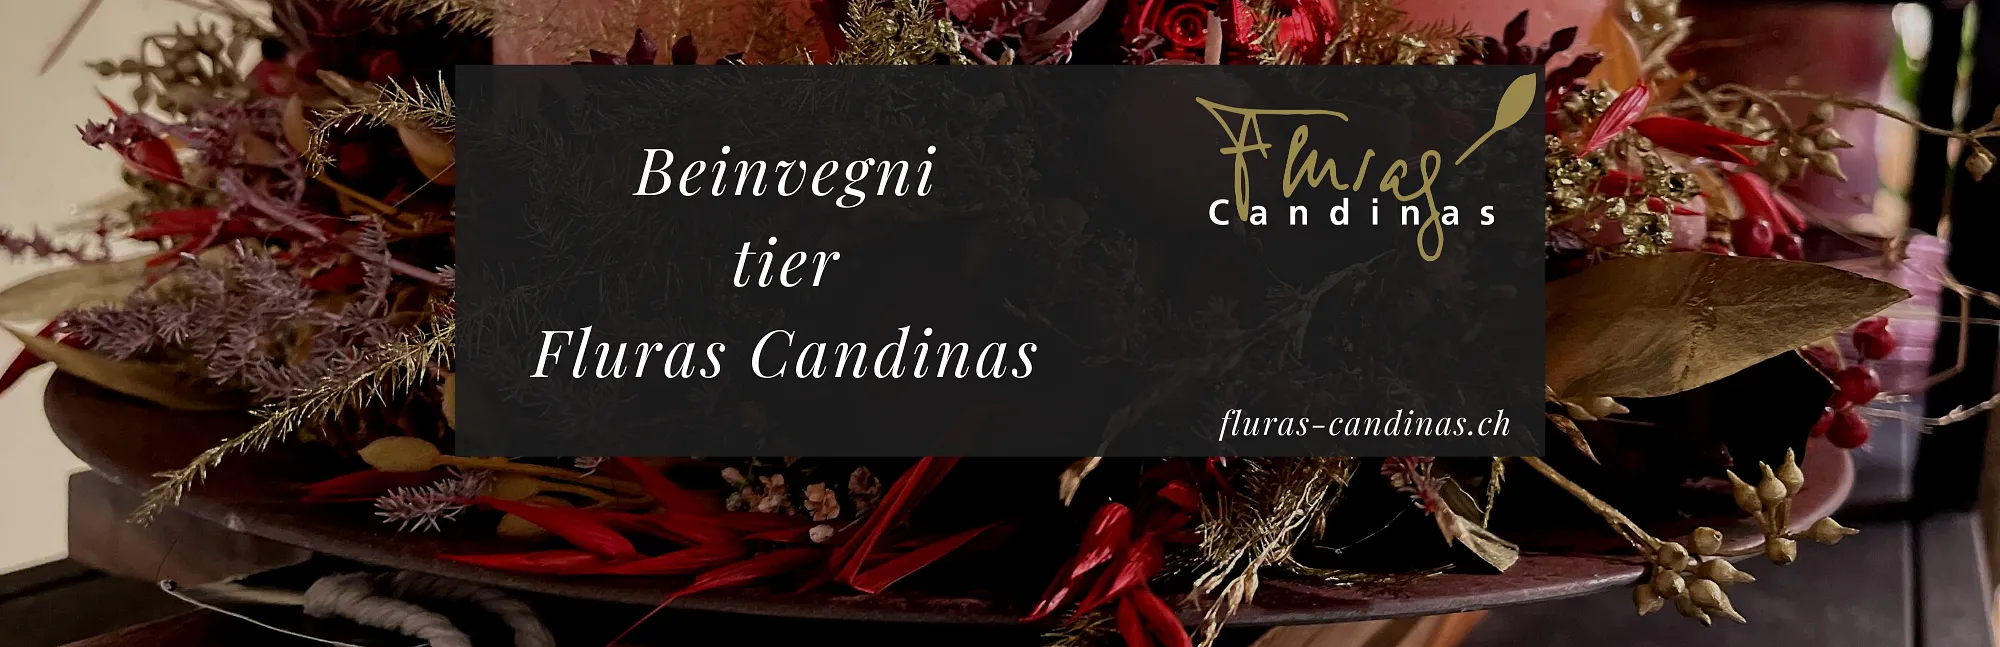 Blumen Candinas / Fluras Candinas